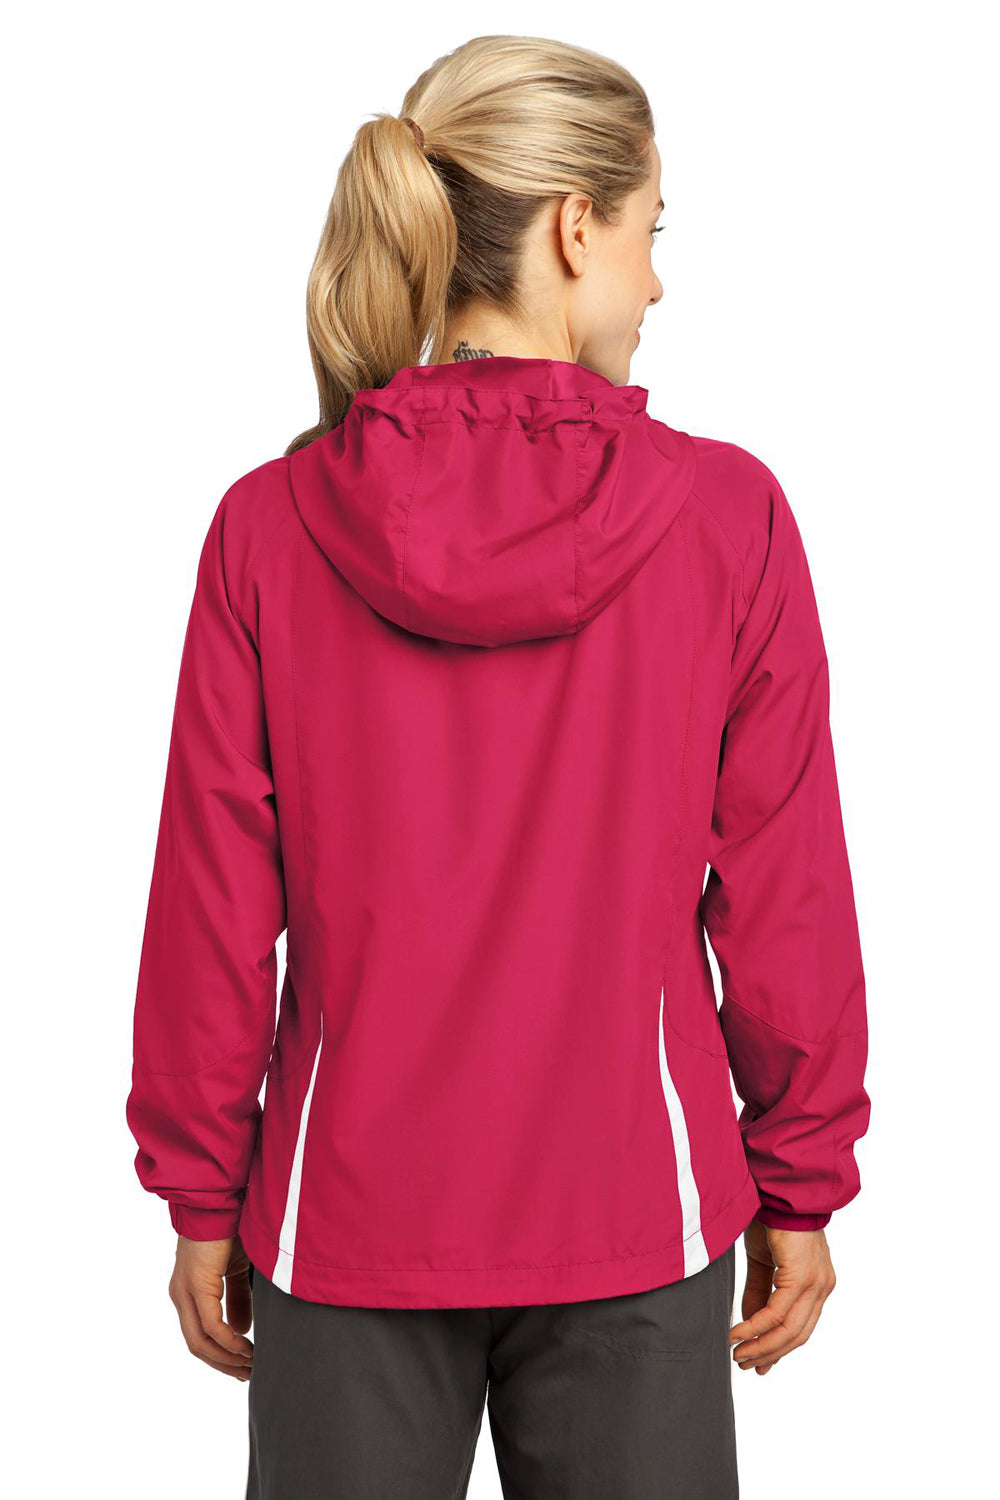 Sport-Tek LST76 Womens Water Resistant Full Zip Hooded Jacket Fuchsia Pink Back